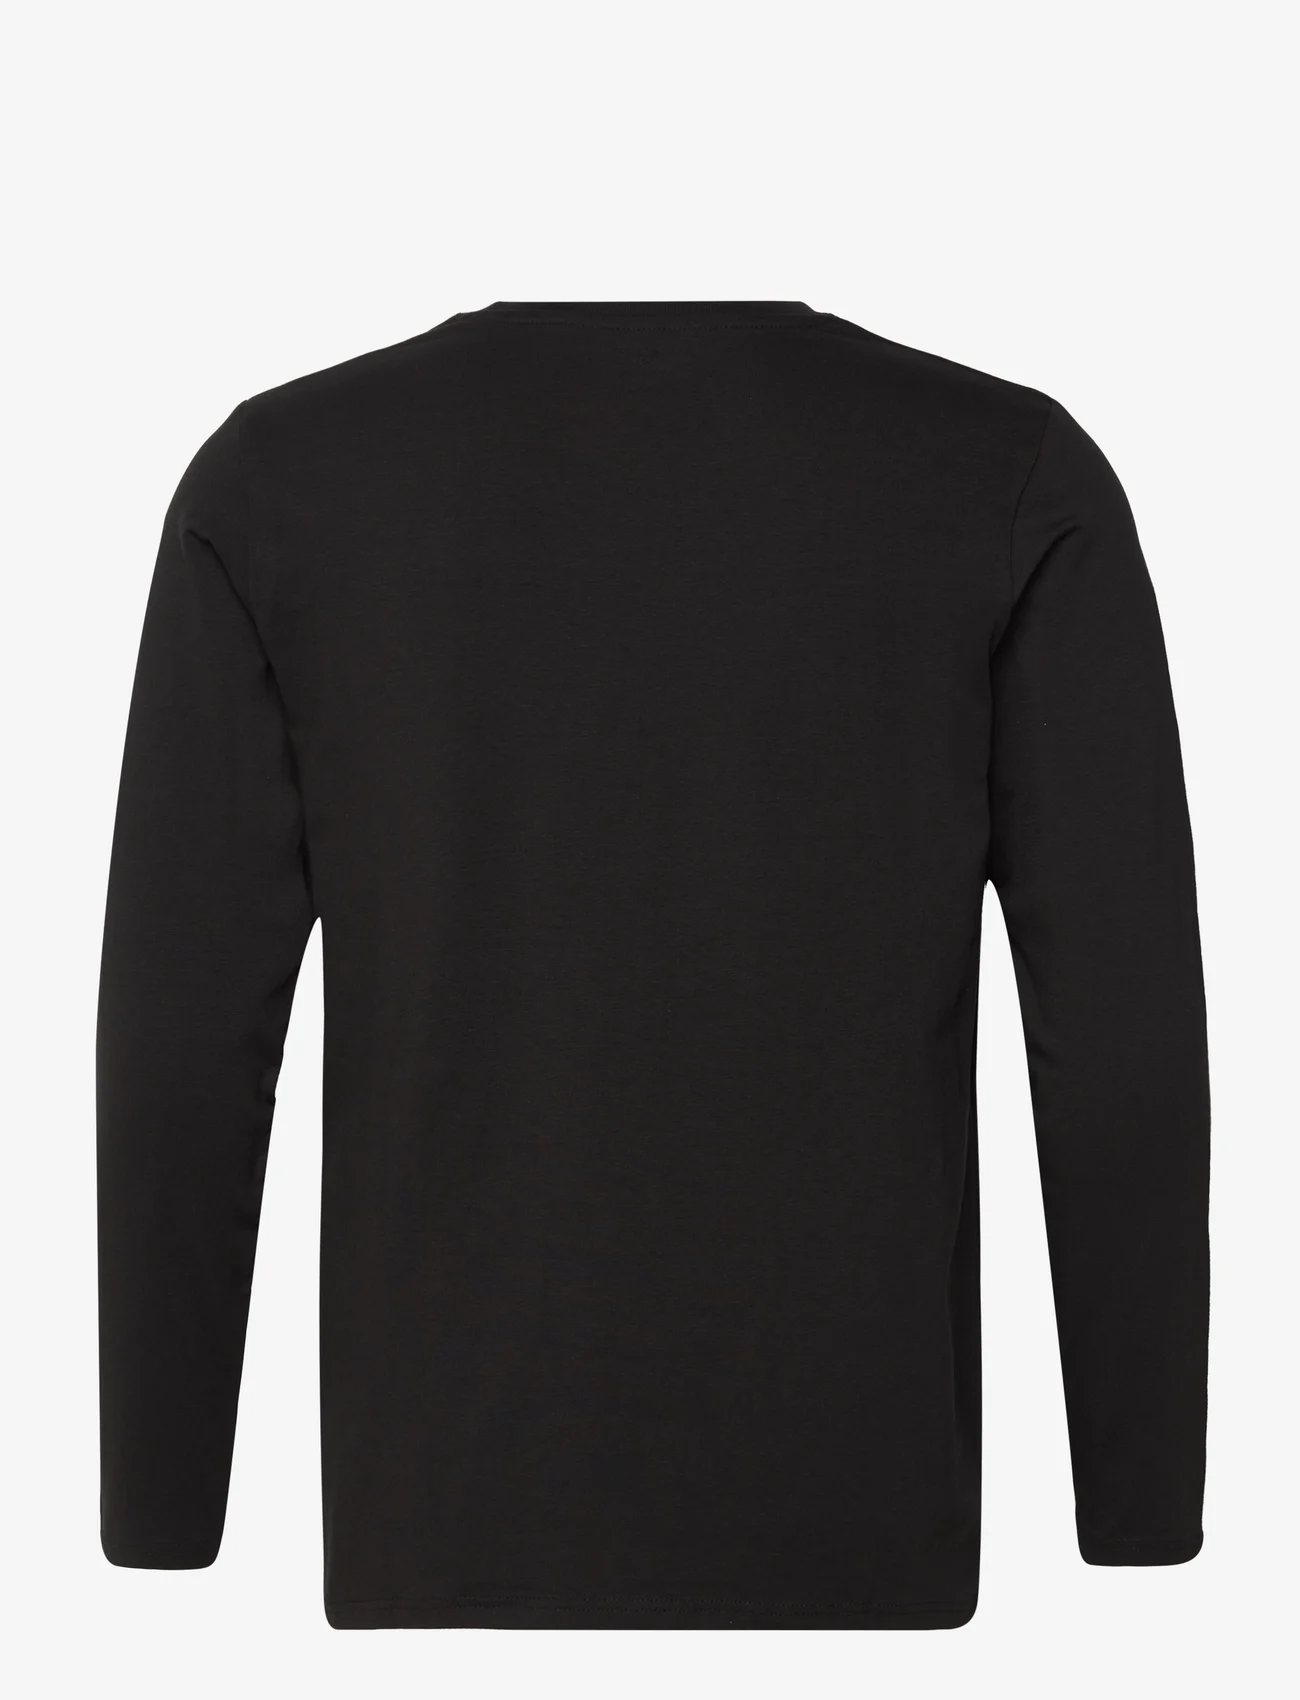 NORVIG - Men's O-neck L/S T-shirt, Cotton/Stretch - long-sleeved t-shirts - black - 1